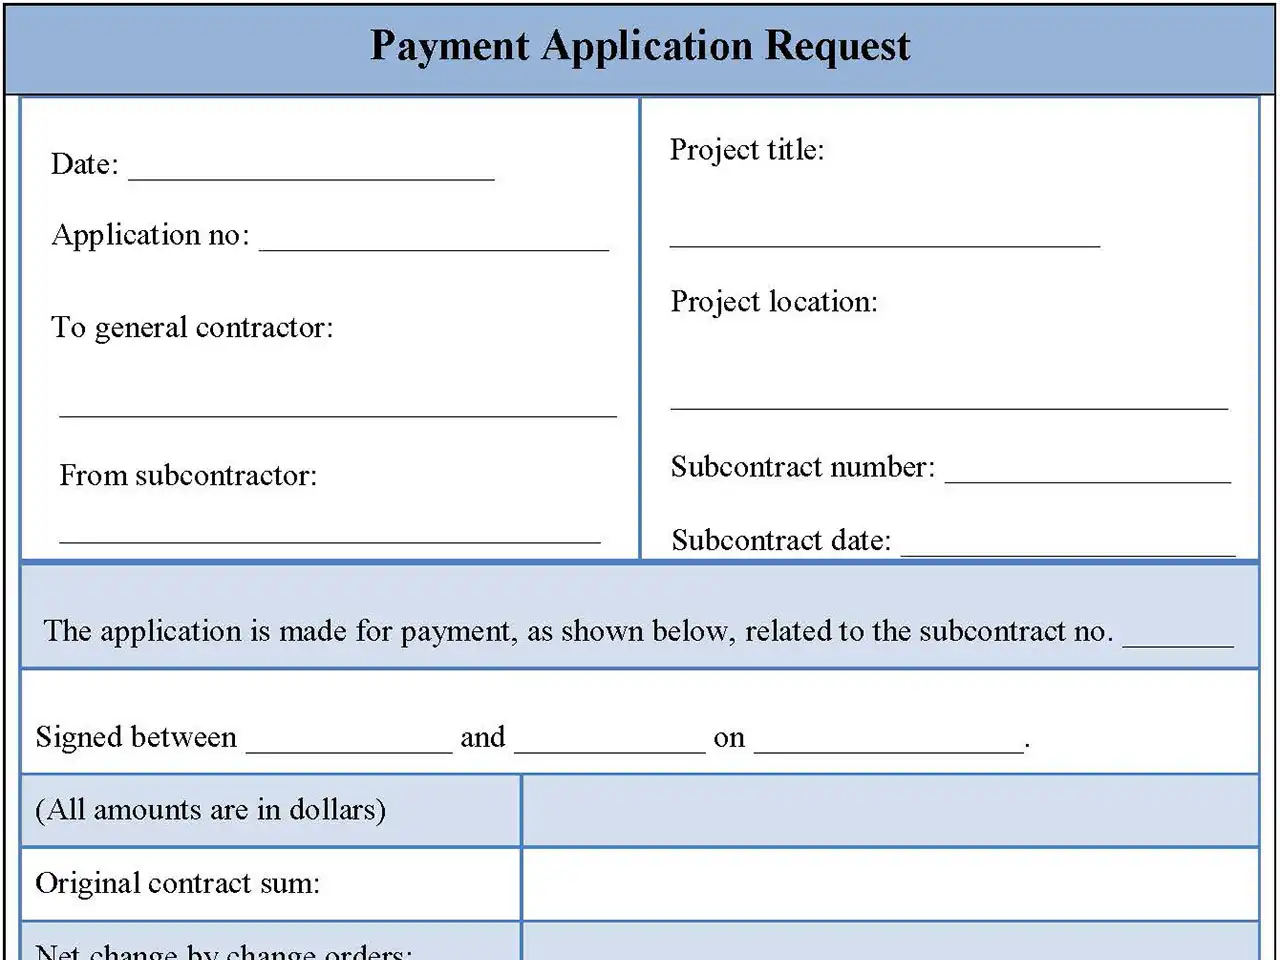 Payment Application Request form